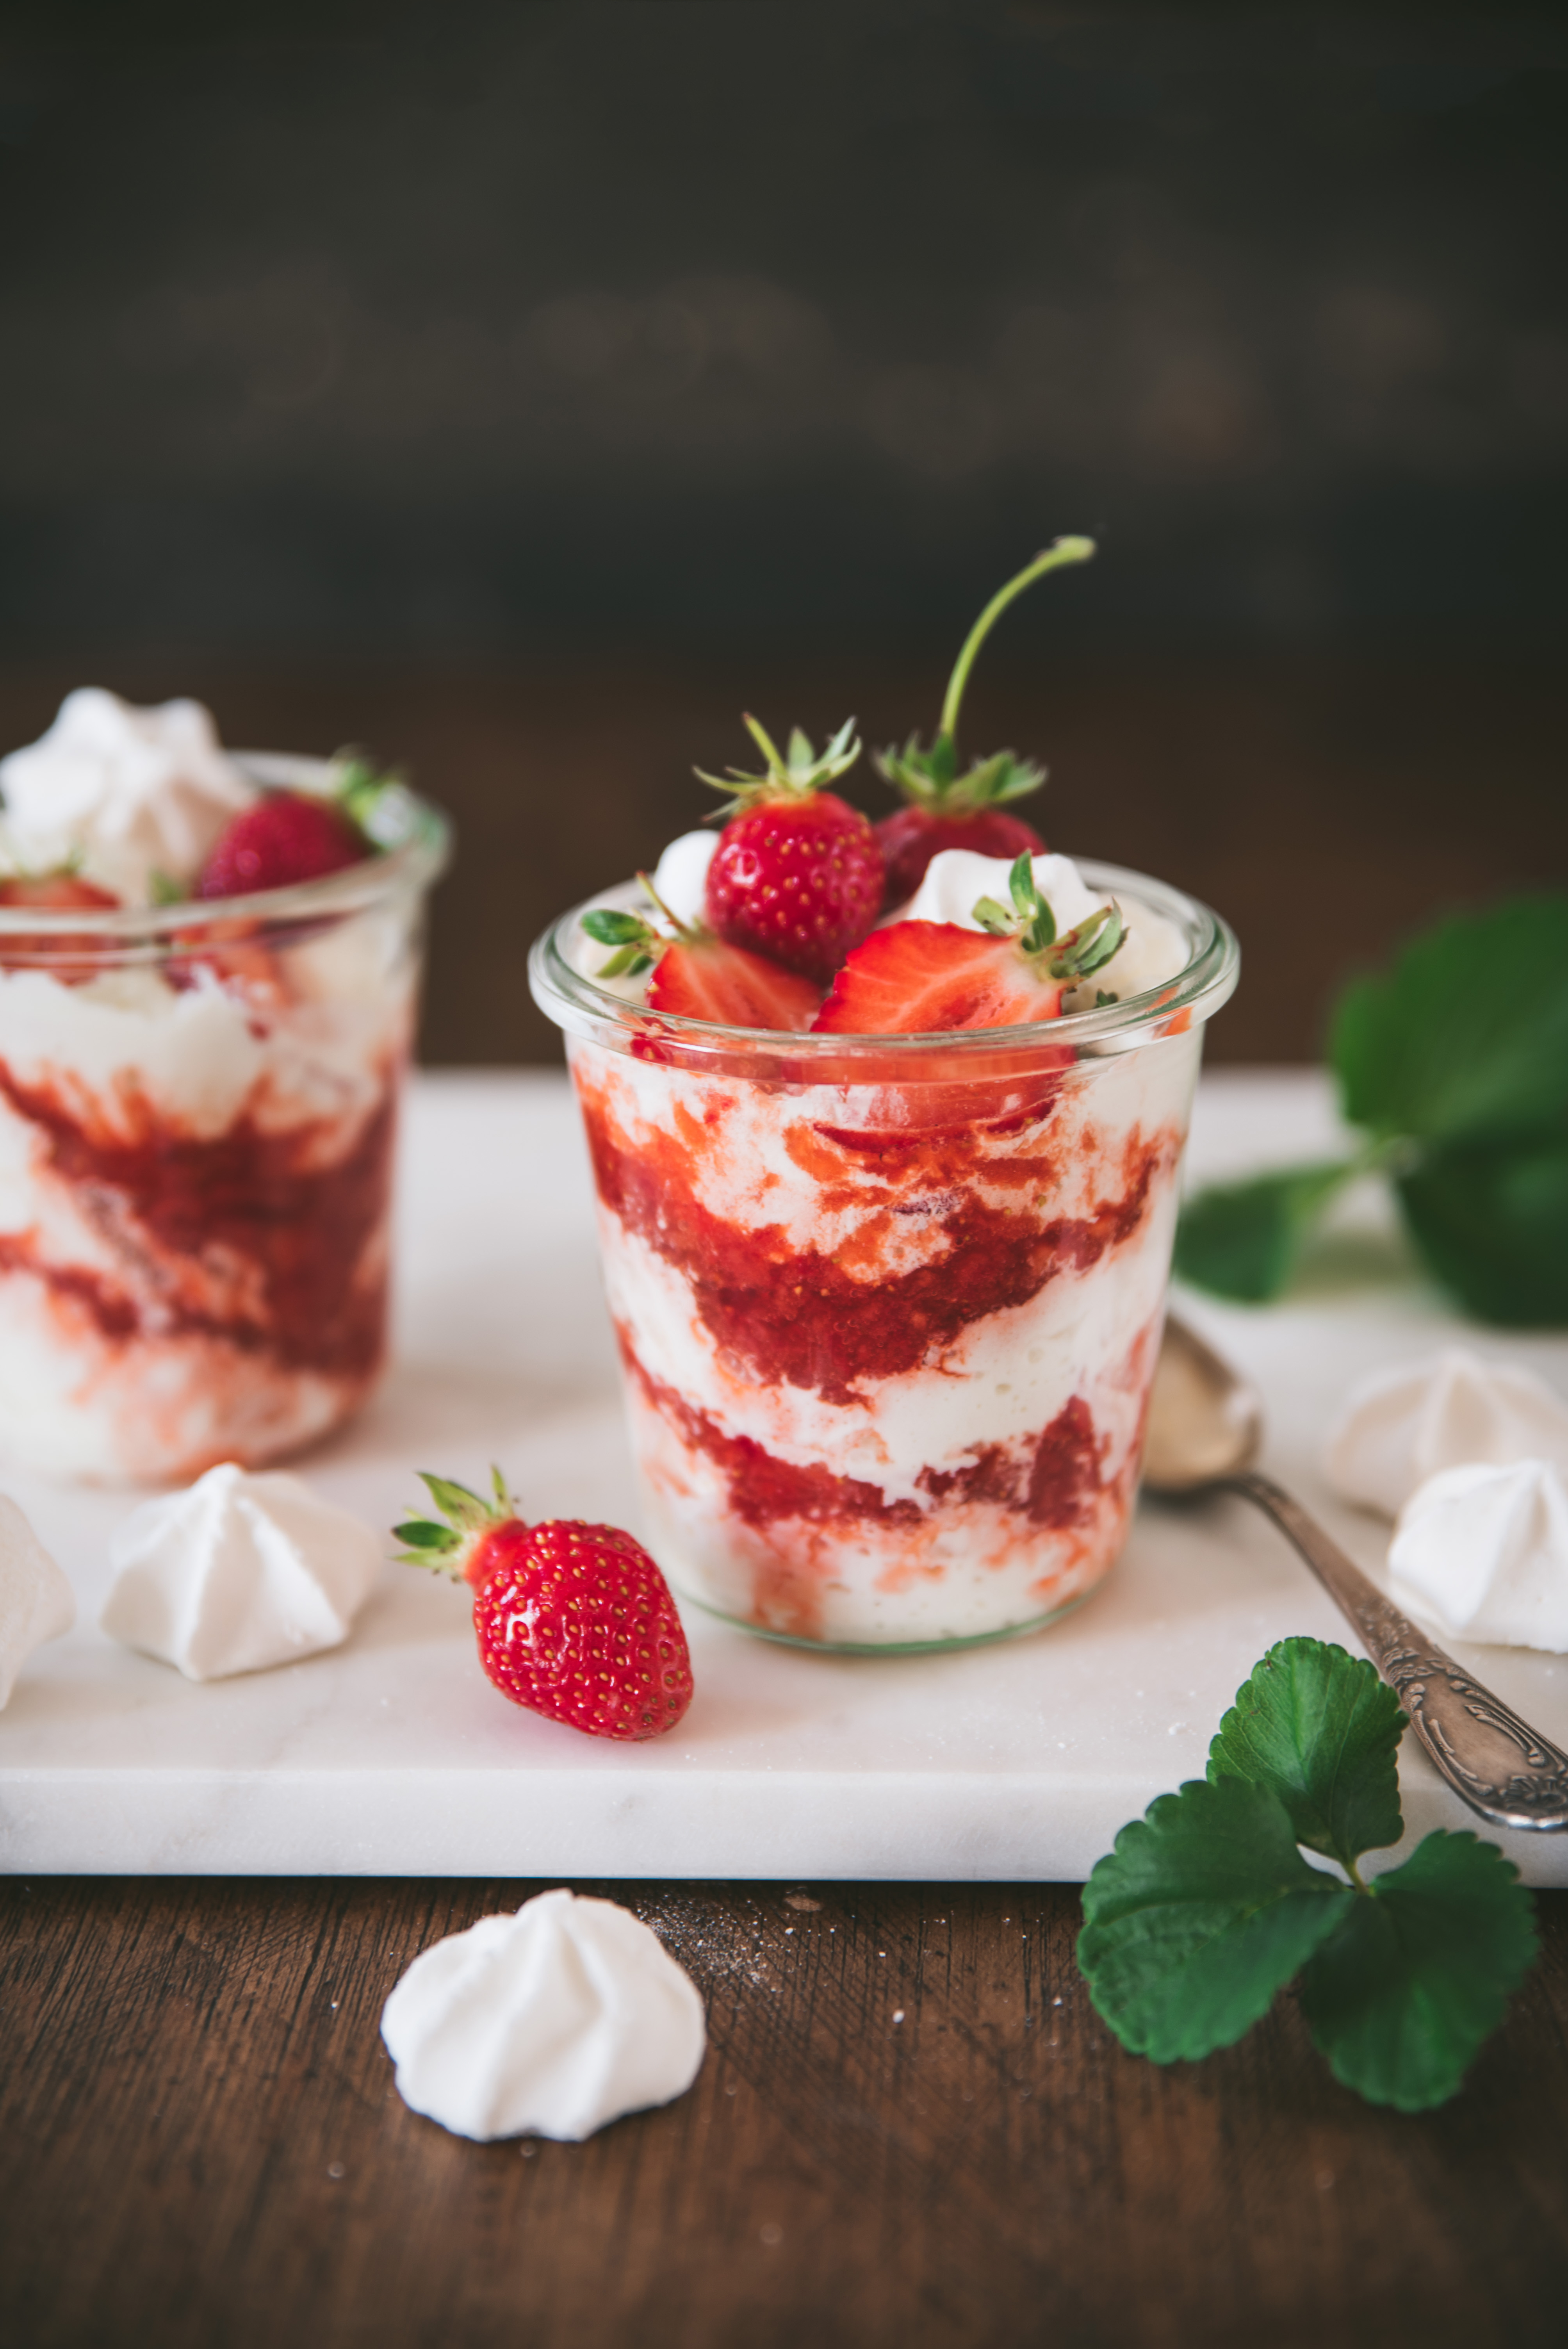 dessert with Strawberries